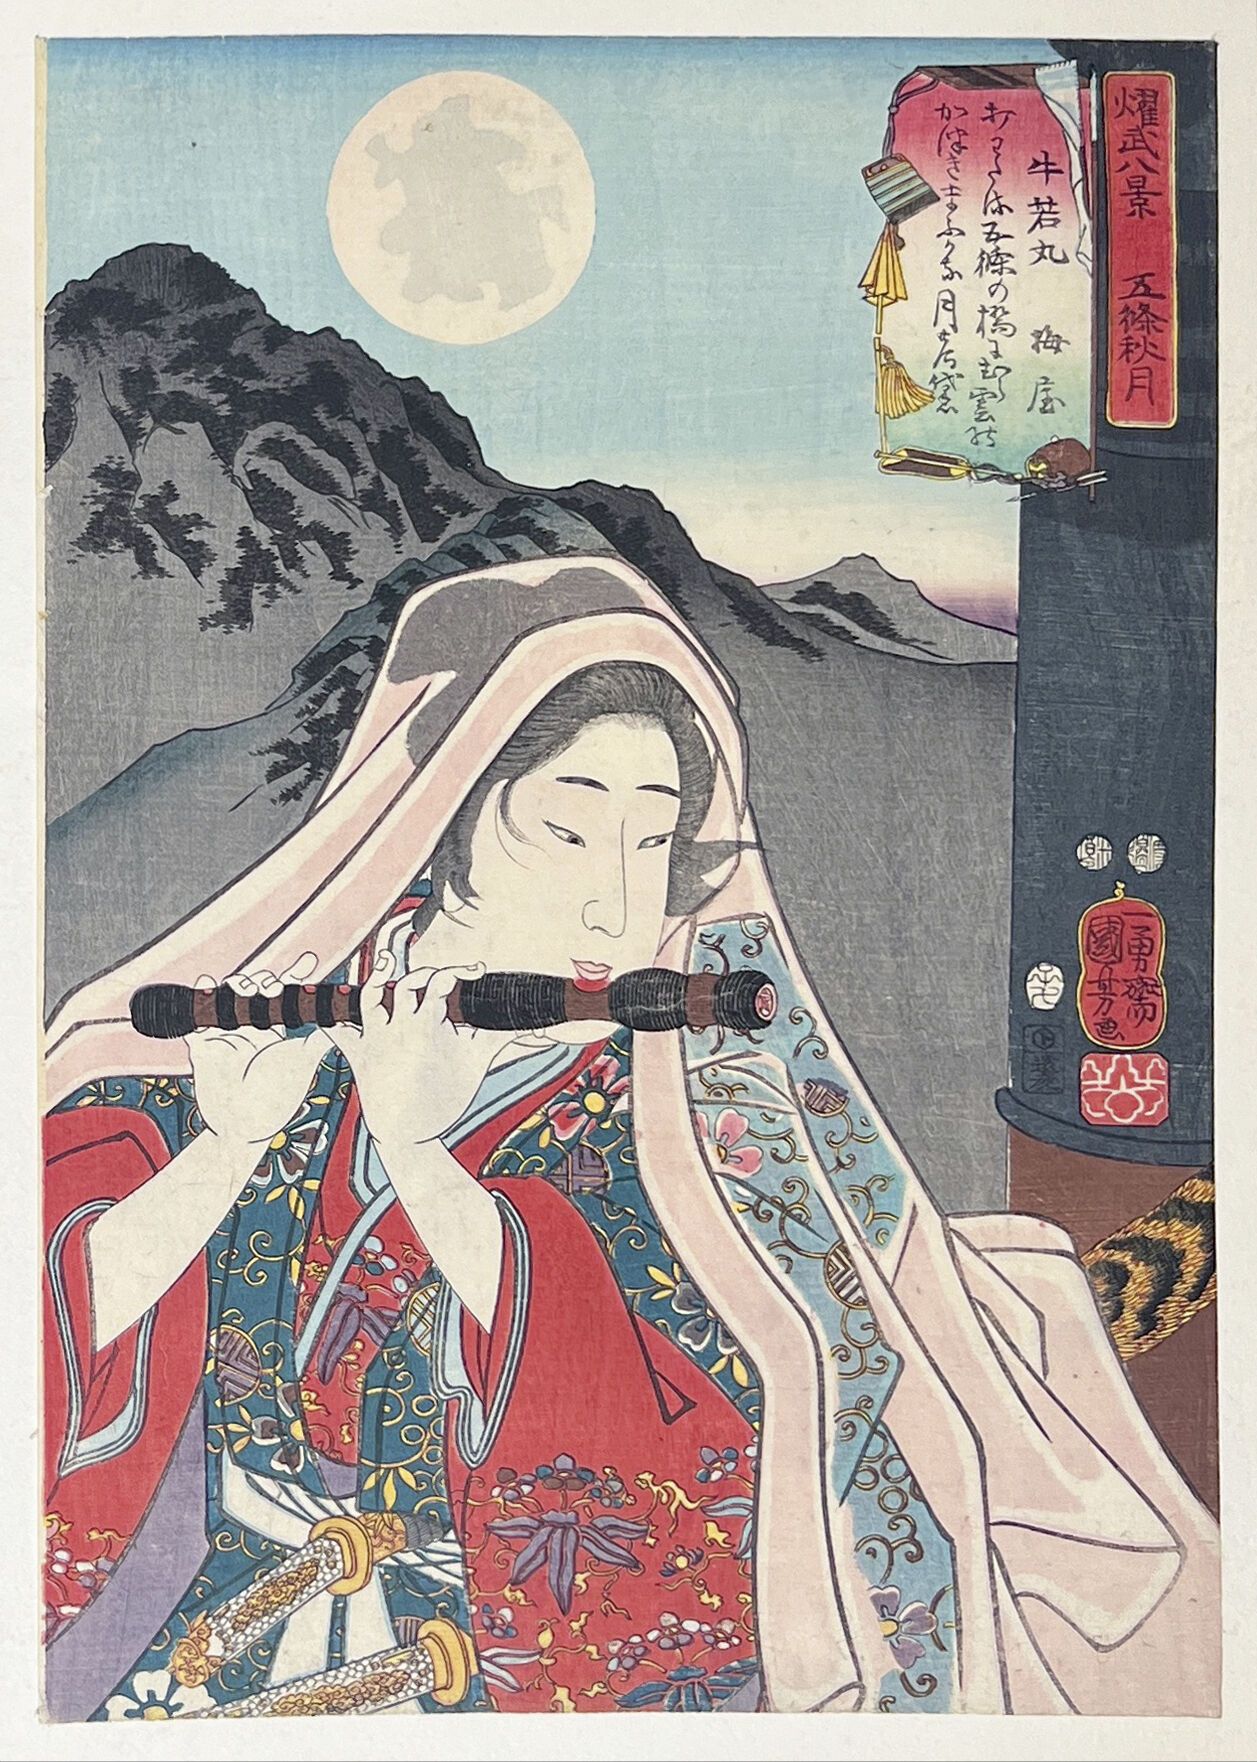 Null 宇都宫邦彦 (1797-1861)
御笔八景系列中的 "御笔手绘"，版画 "五丈秋月"。 
署名Ichiyusai Kuniyoshi，出版商Ensh&hellip;